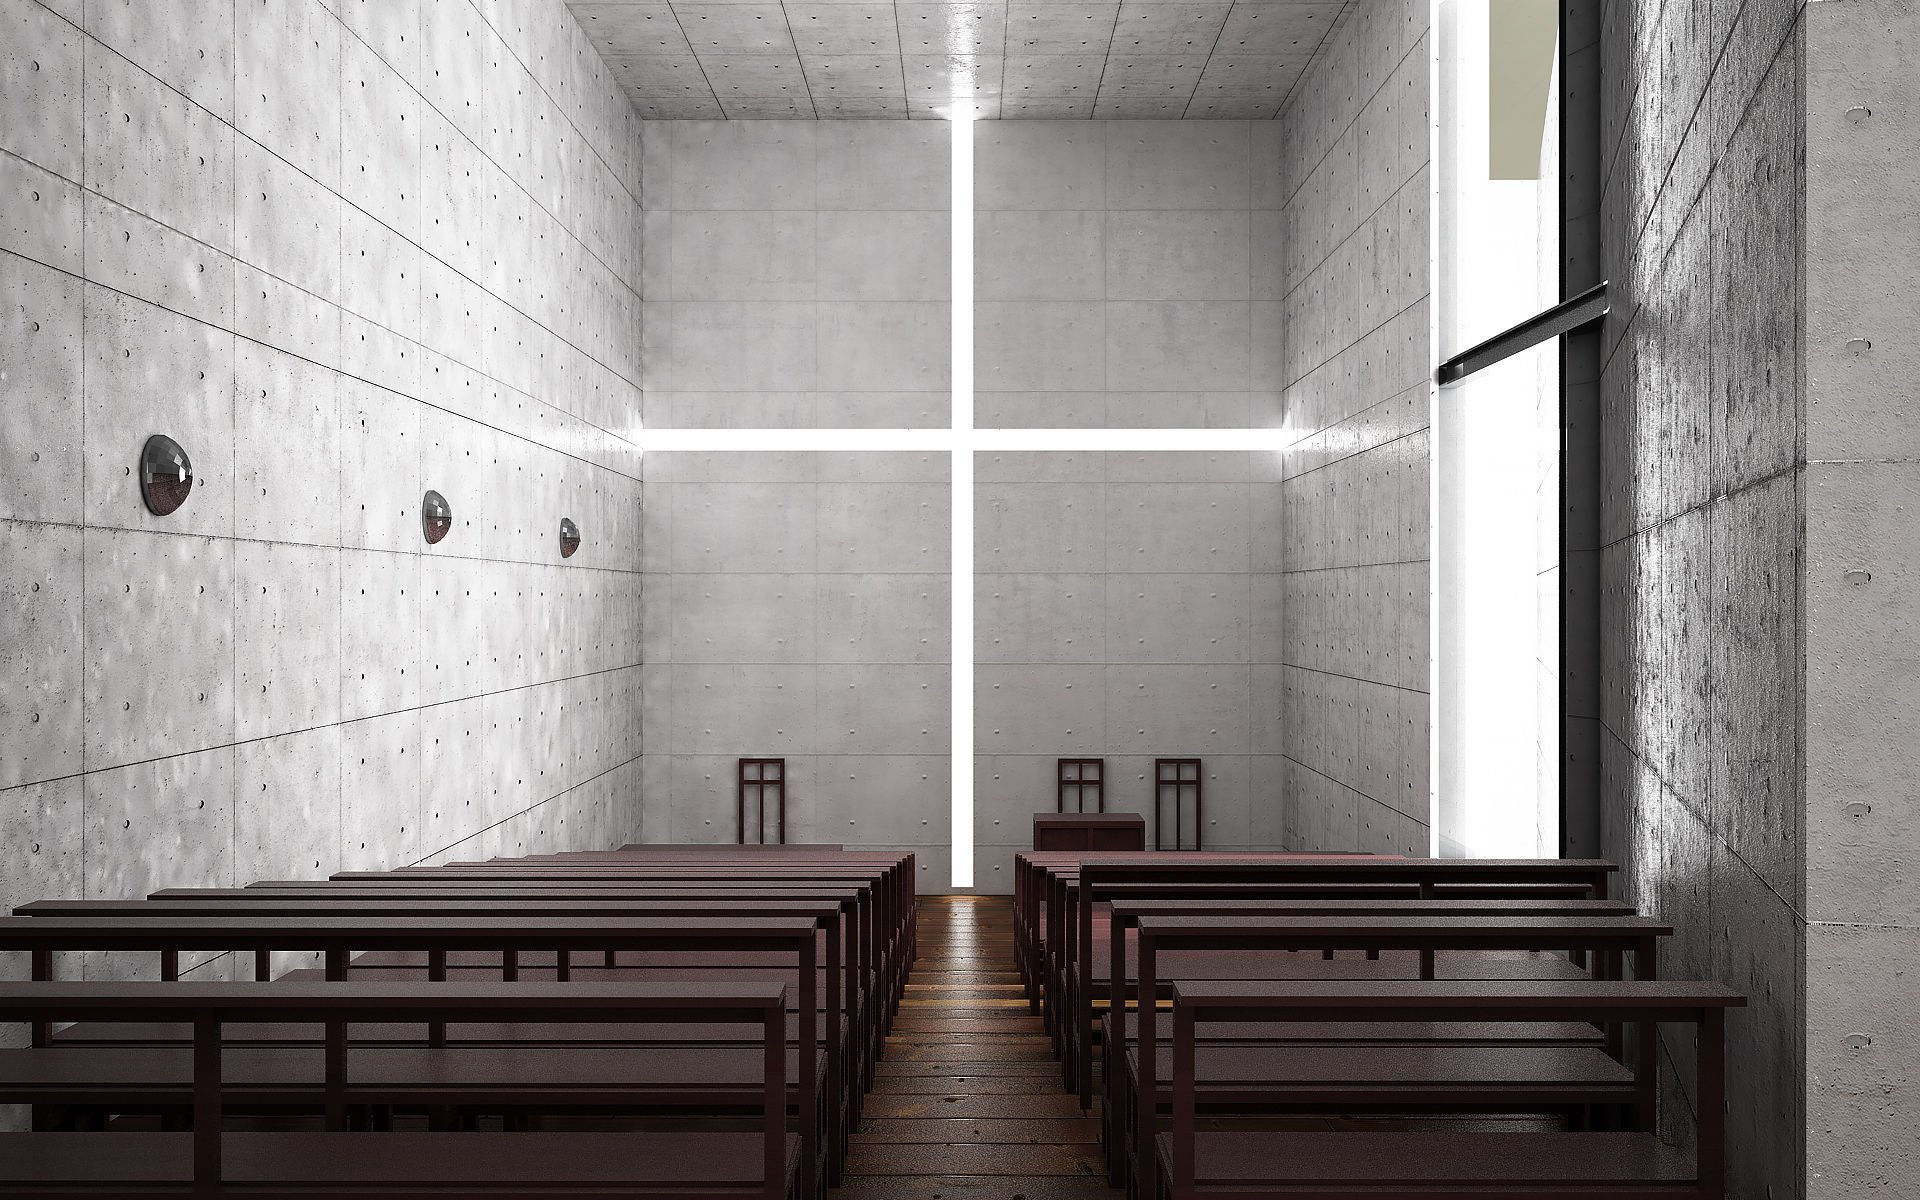 Iglesia de la luz de Tadao Ando en Osaka